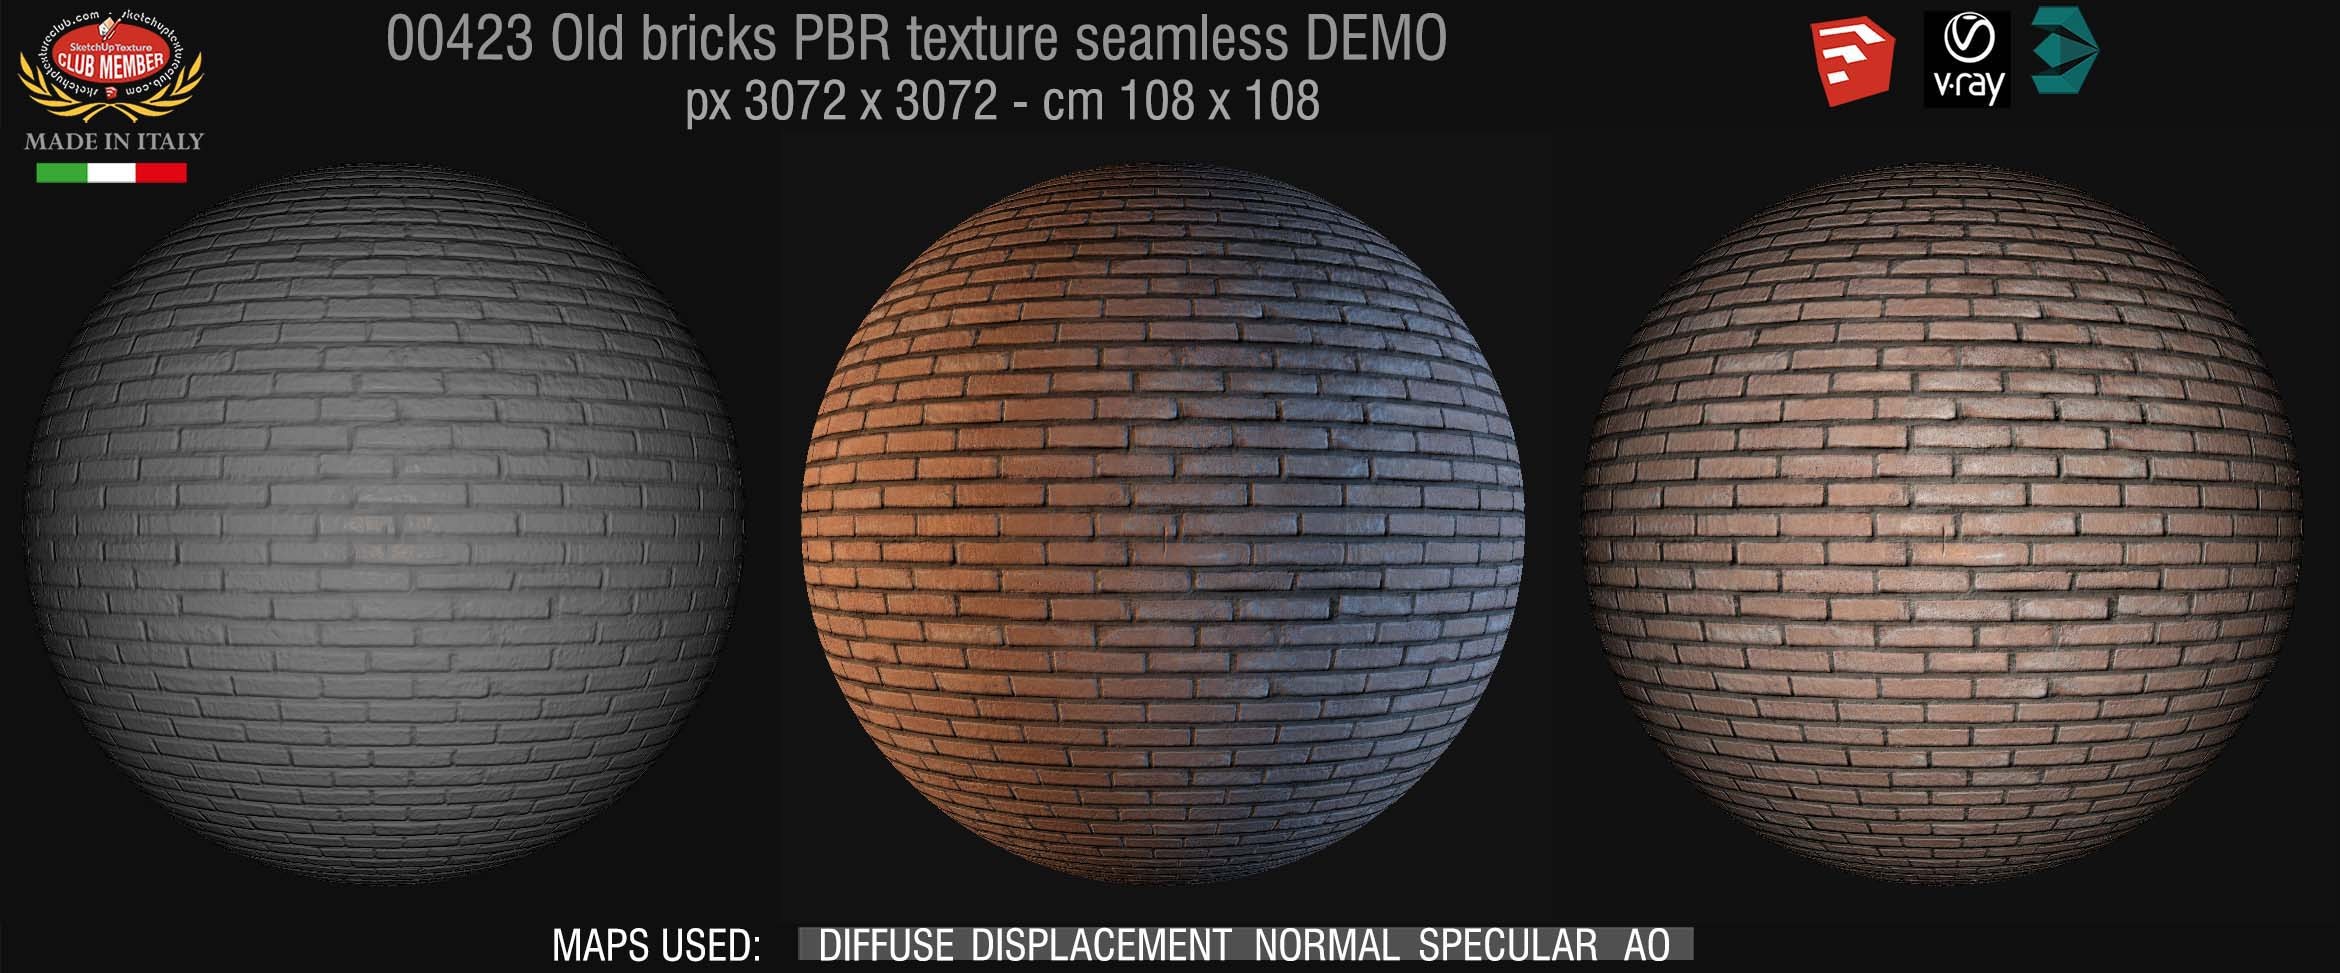 00423 Old bricks PBR texture seamless DEMO